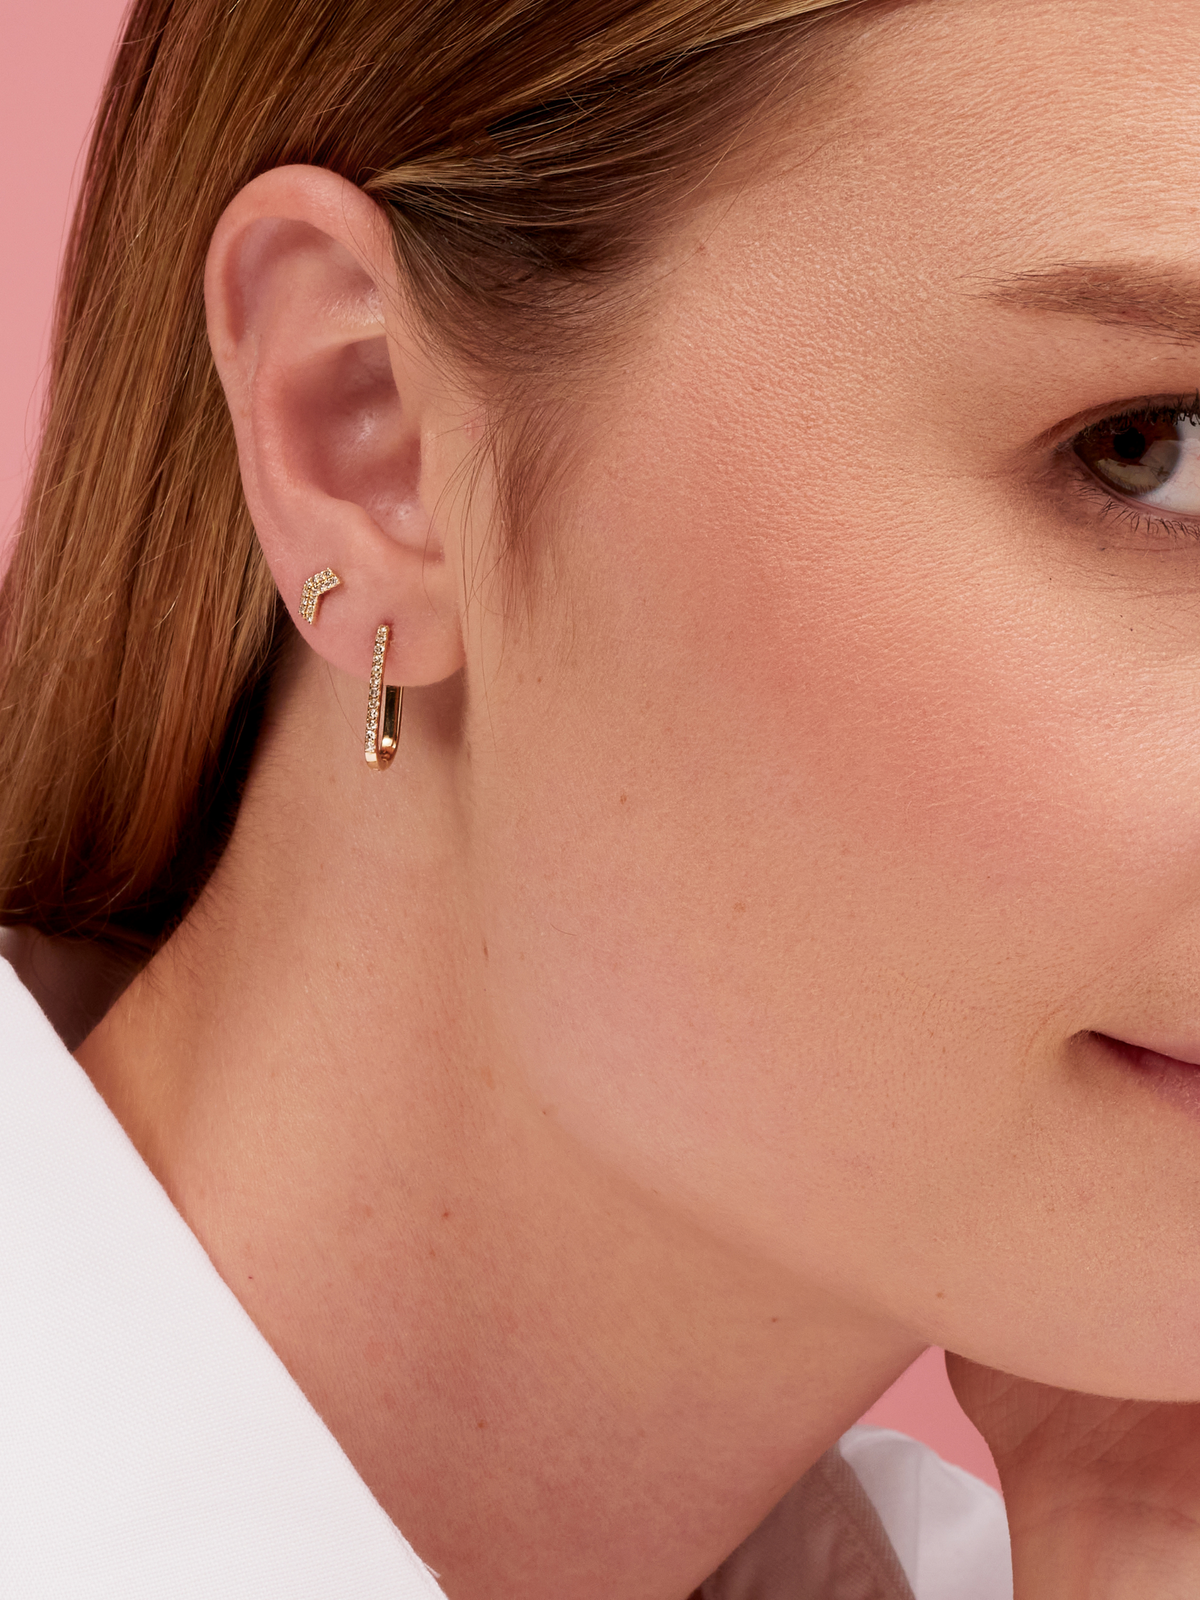 Chevron earrings paired with diamond paperclip earring on model ear